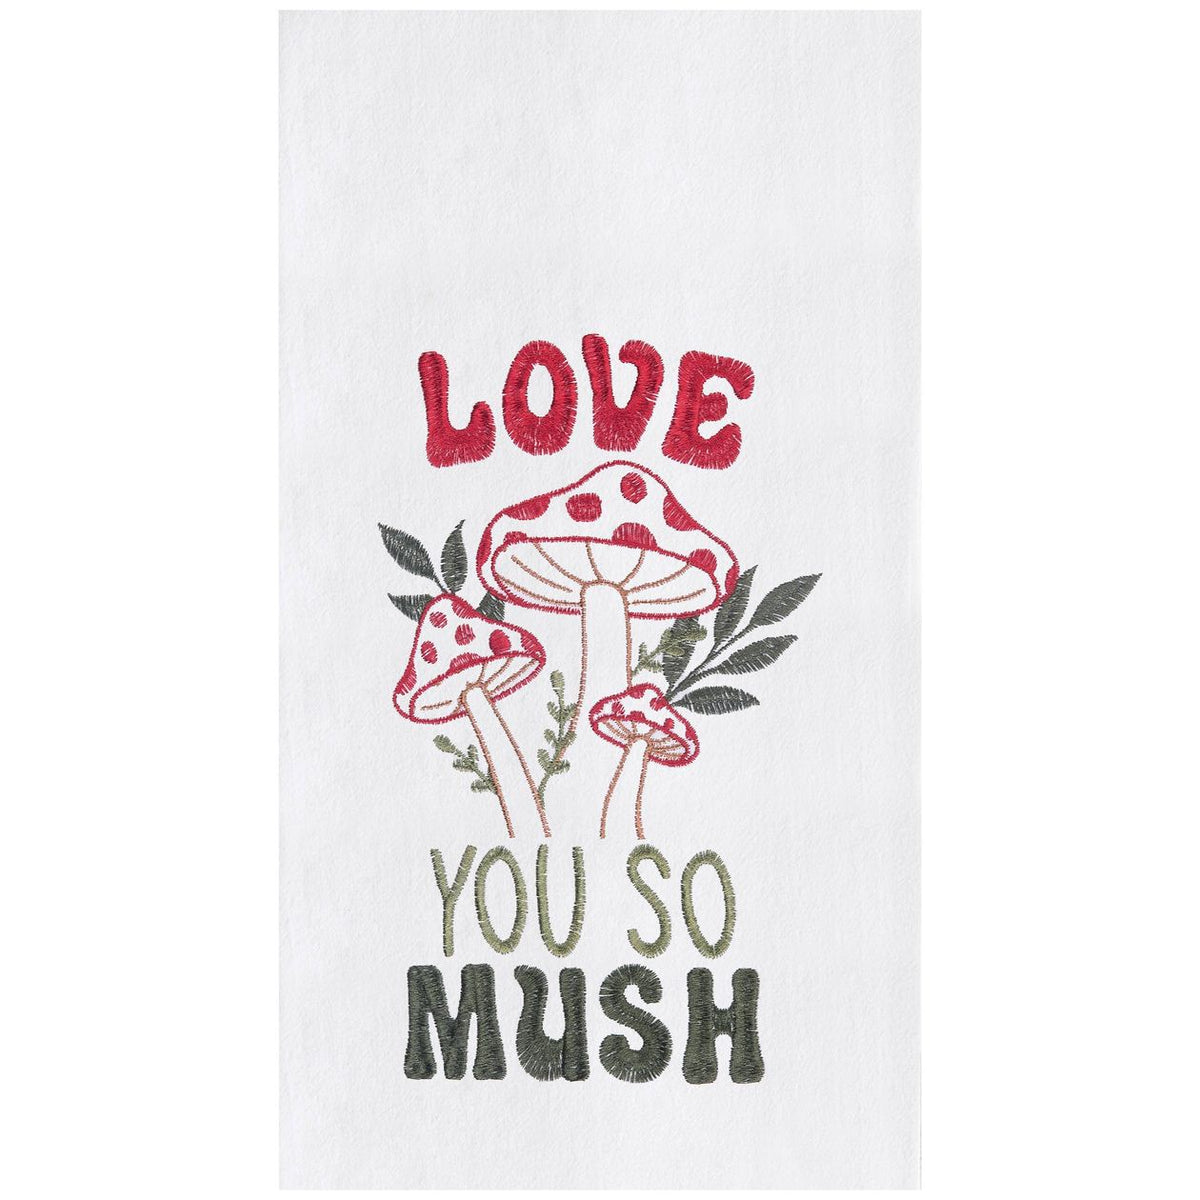 'Love You So Mush' Decorative Towel